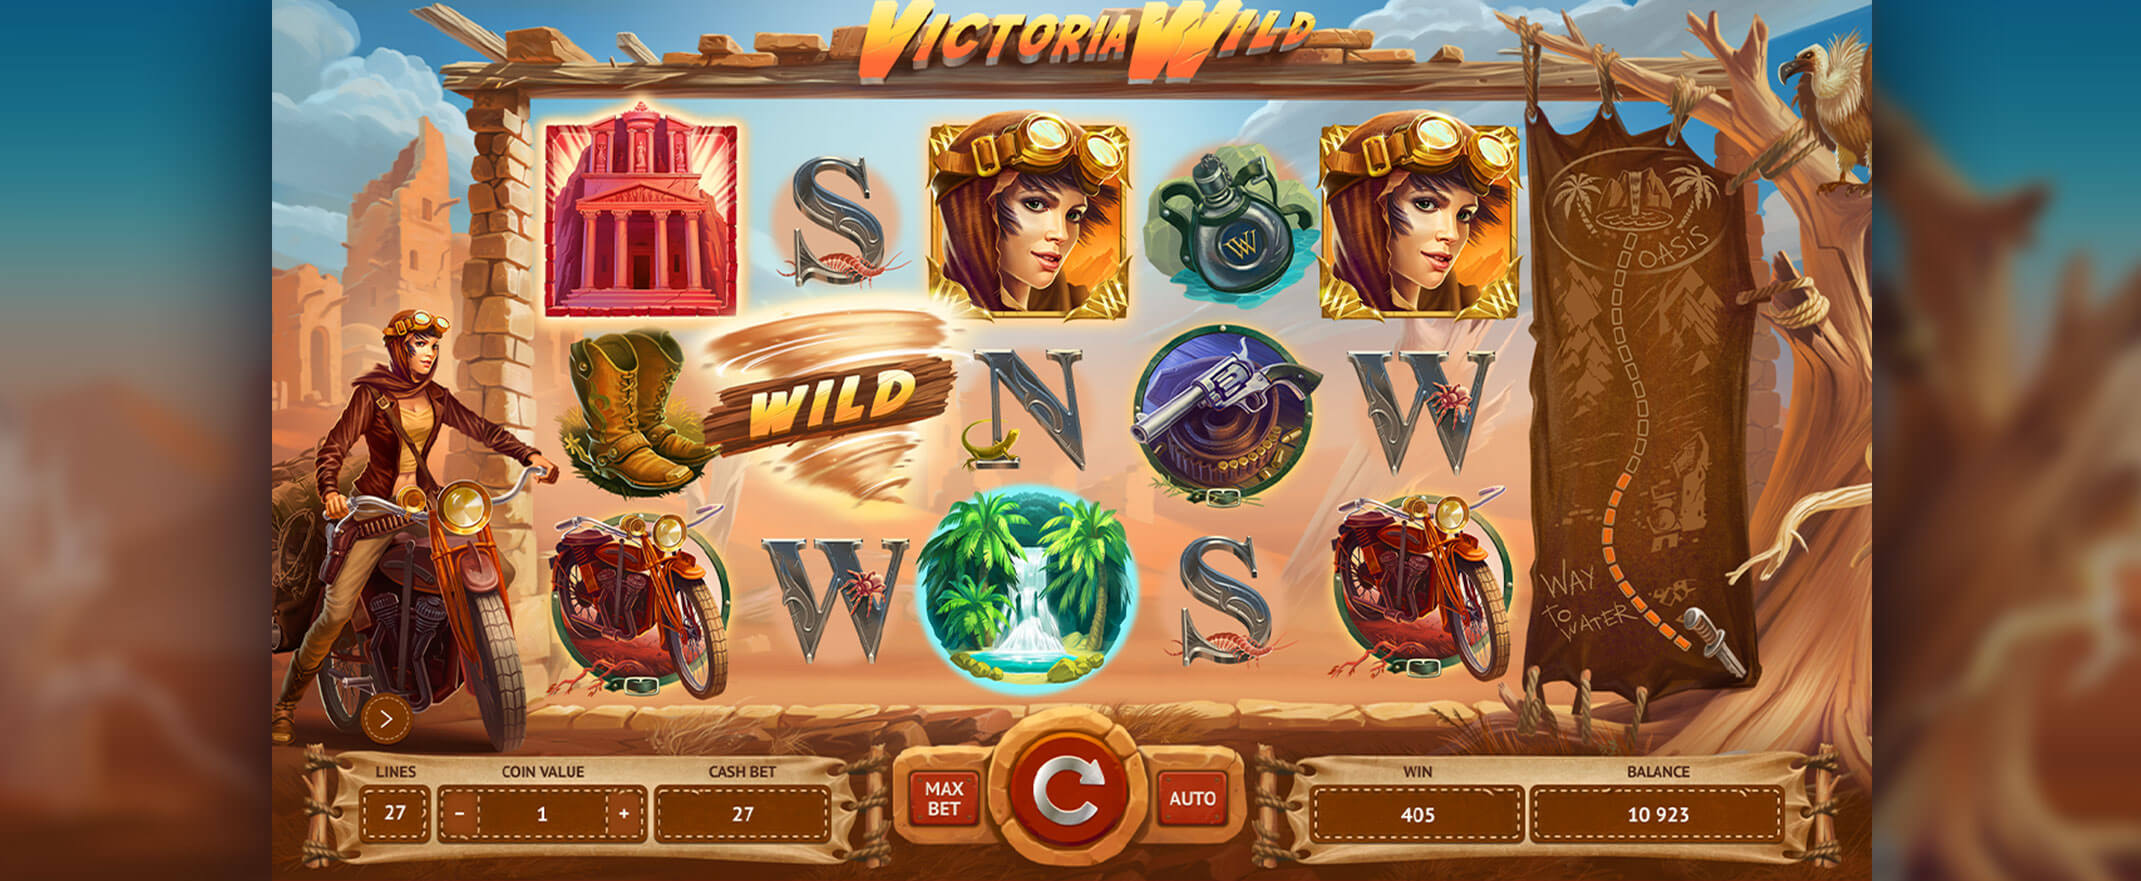 Victoria Wild slot screenshot